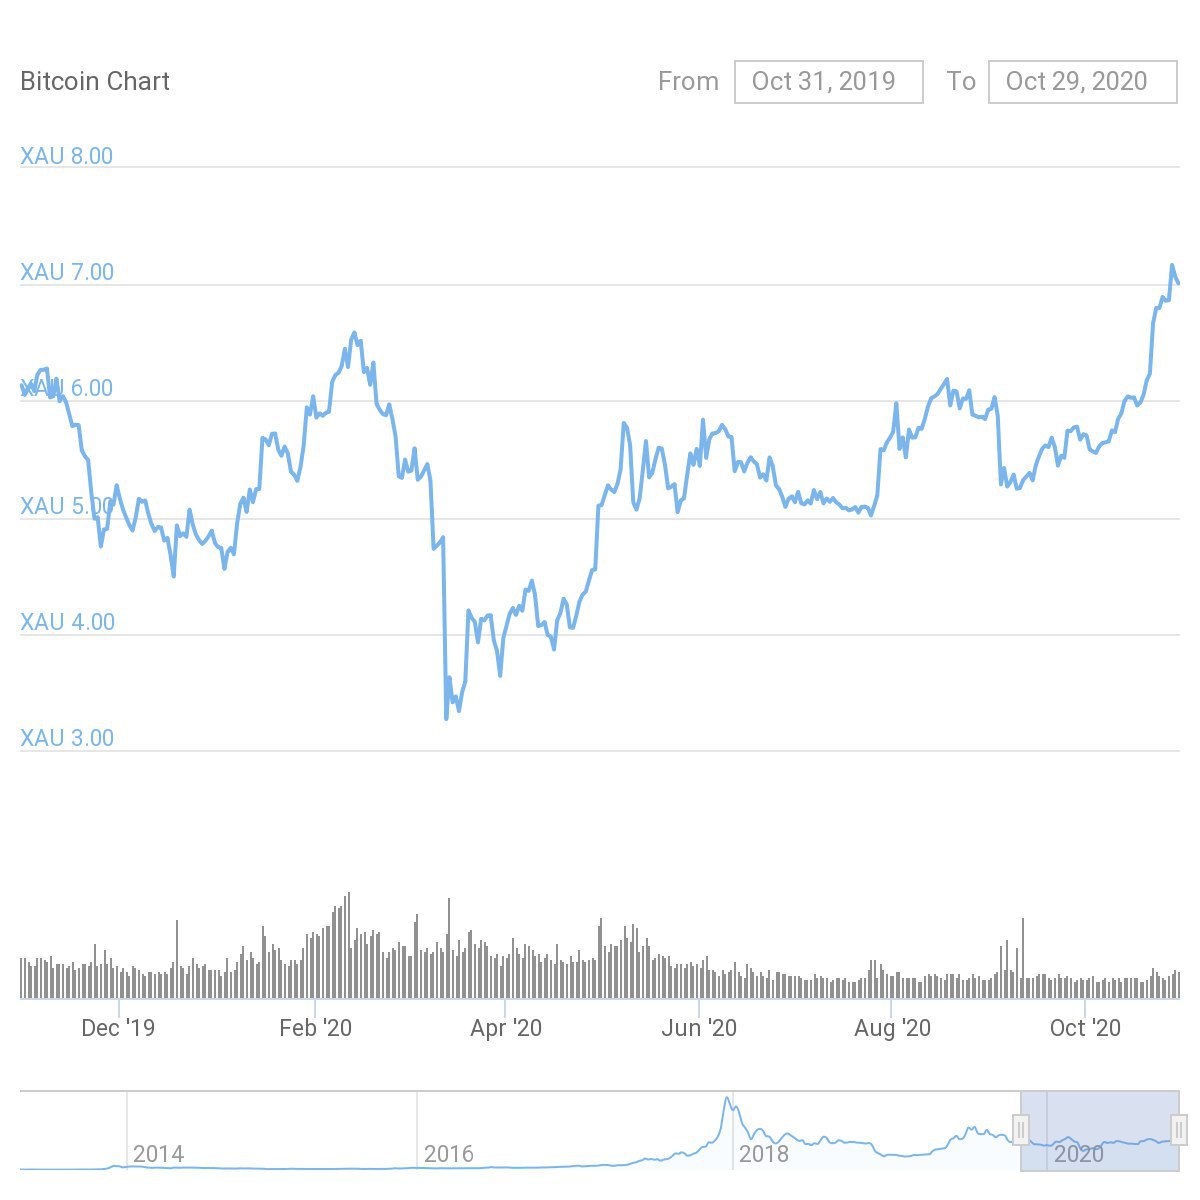 Gold drops to 7oz per BTC as Peter Schiff calls Bitcoin ‘biggest bubble’